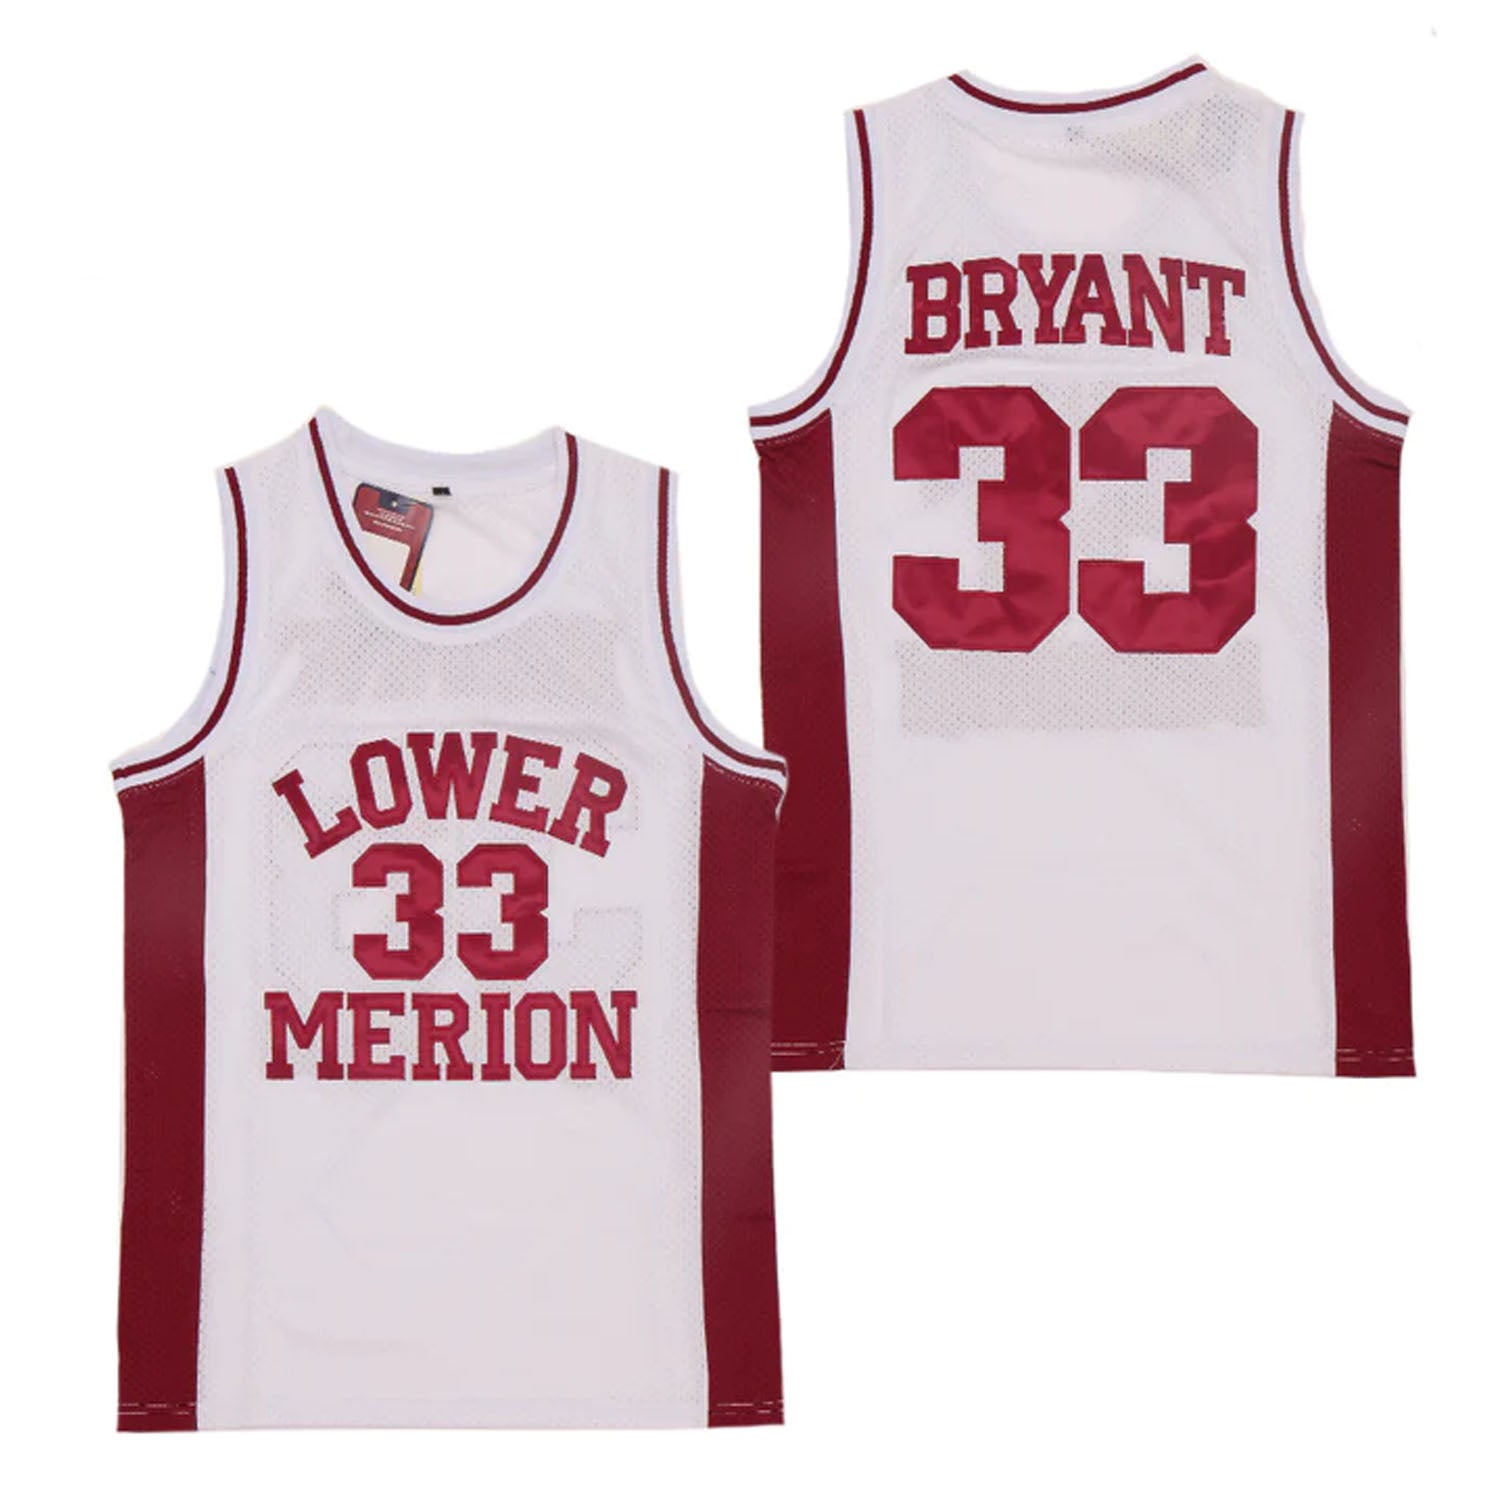 Kobe Bryant Jersey 33 Lower Merion Basketball Jersey Retro High